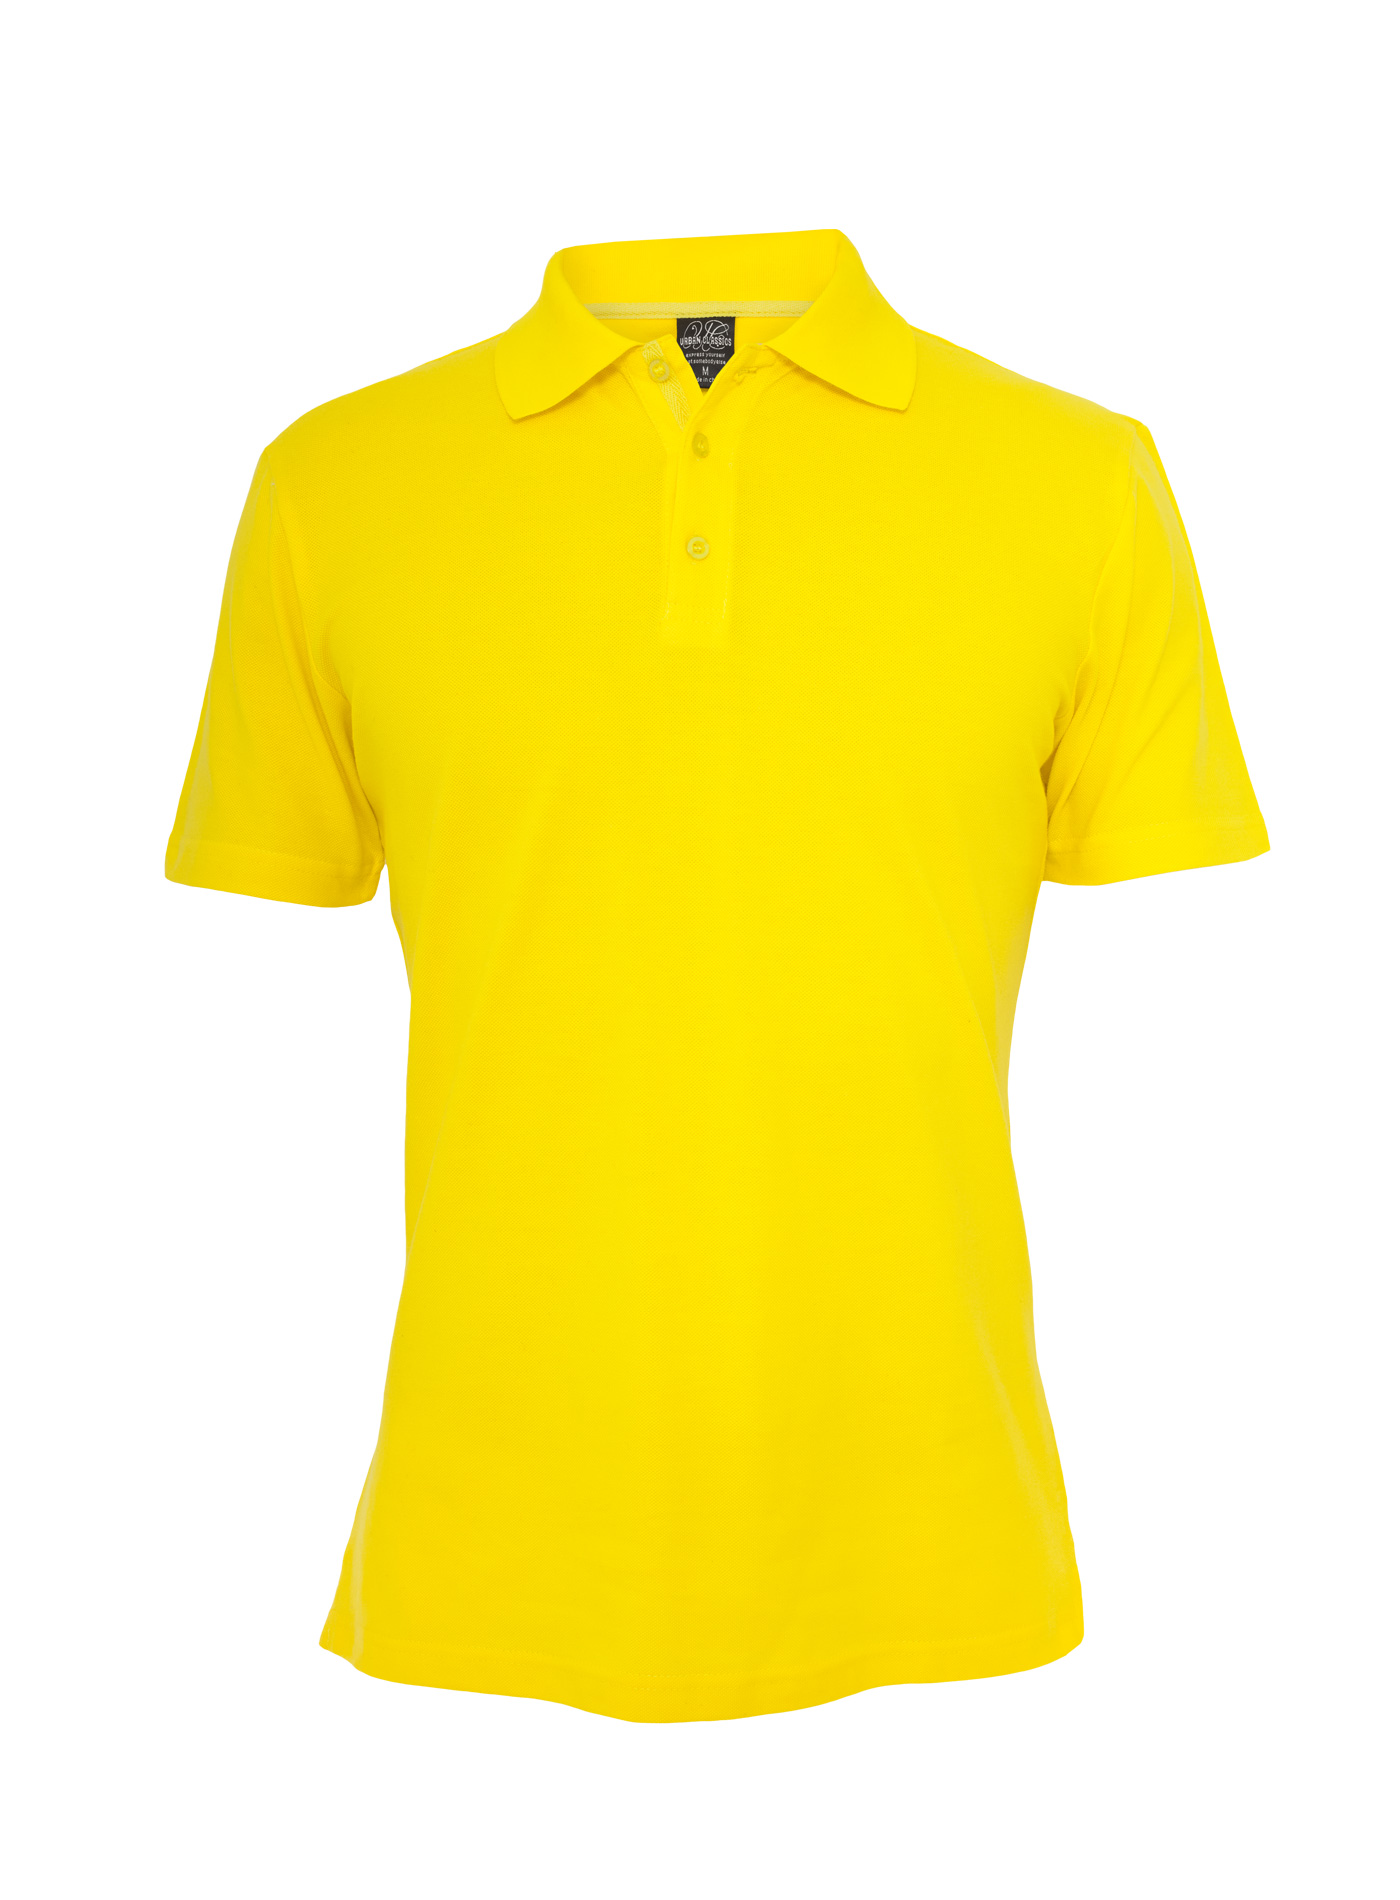 Yellow Polo Shirt Clip Art At Clker Com Vector Clip A - vrogue.co